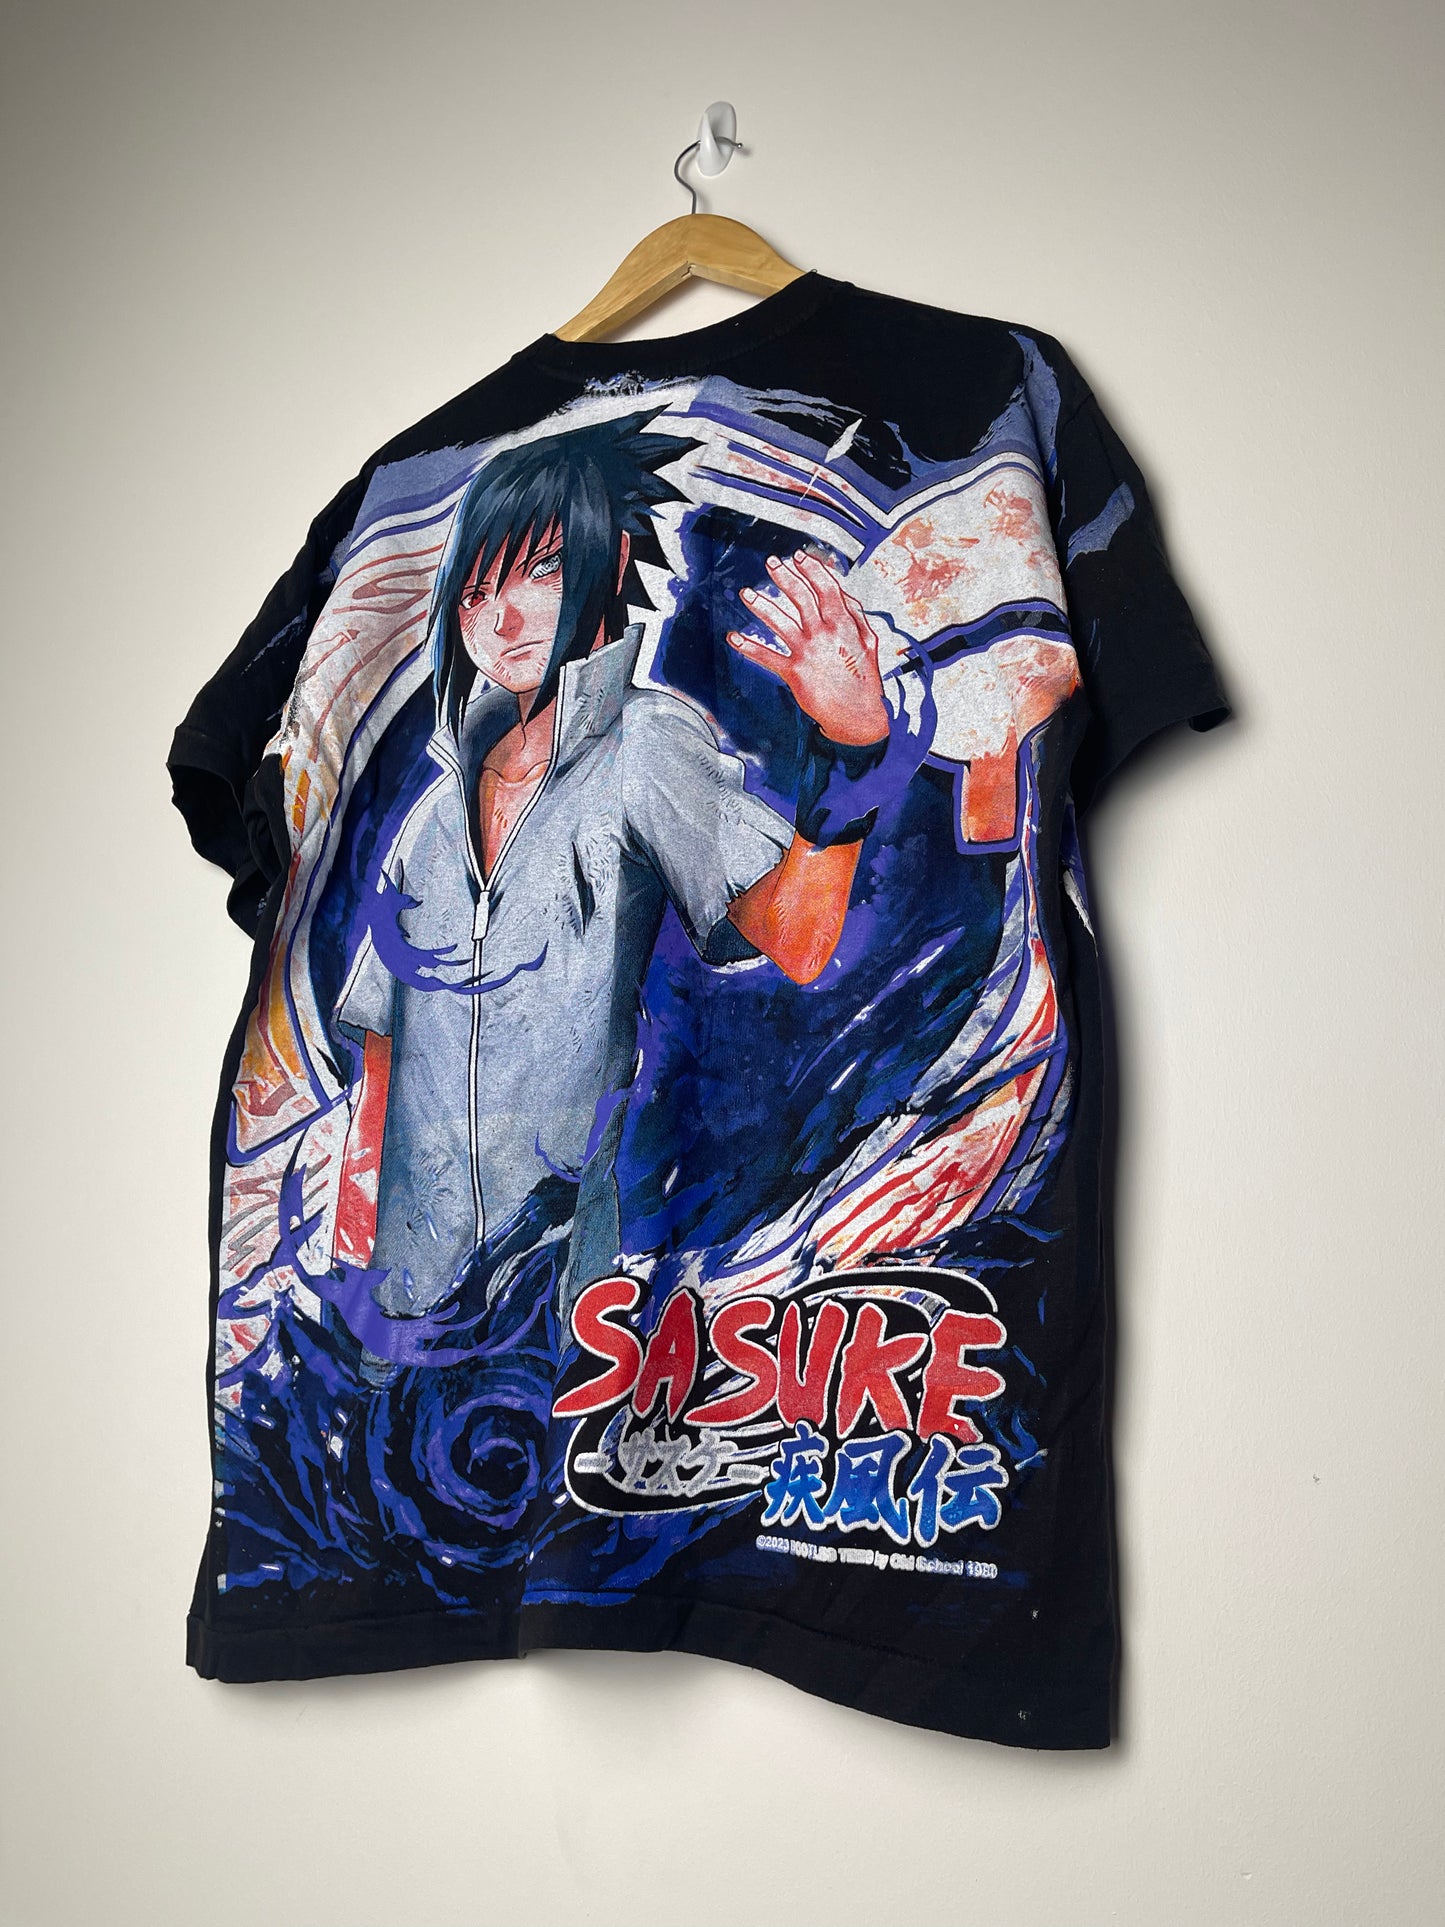 Vintage Style Sasuke Anime Graphic T-shirt - X Large